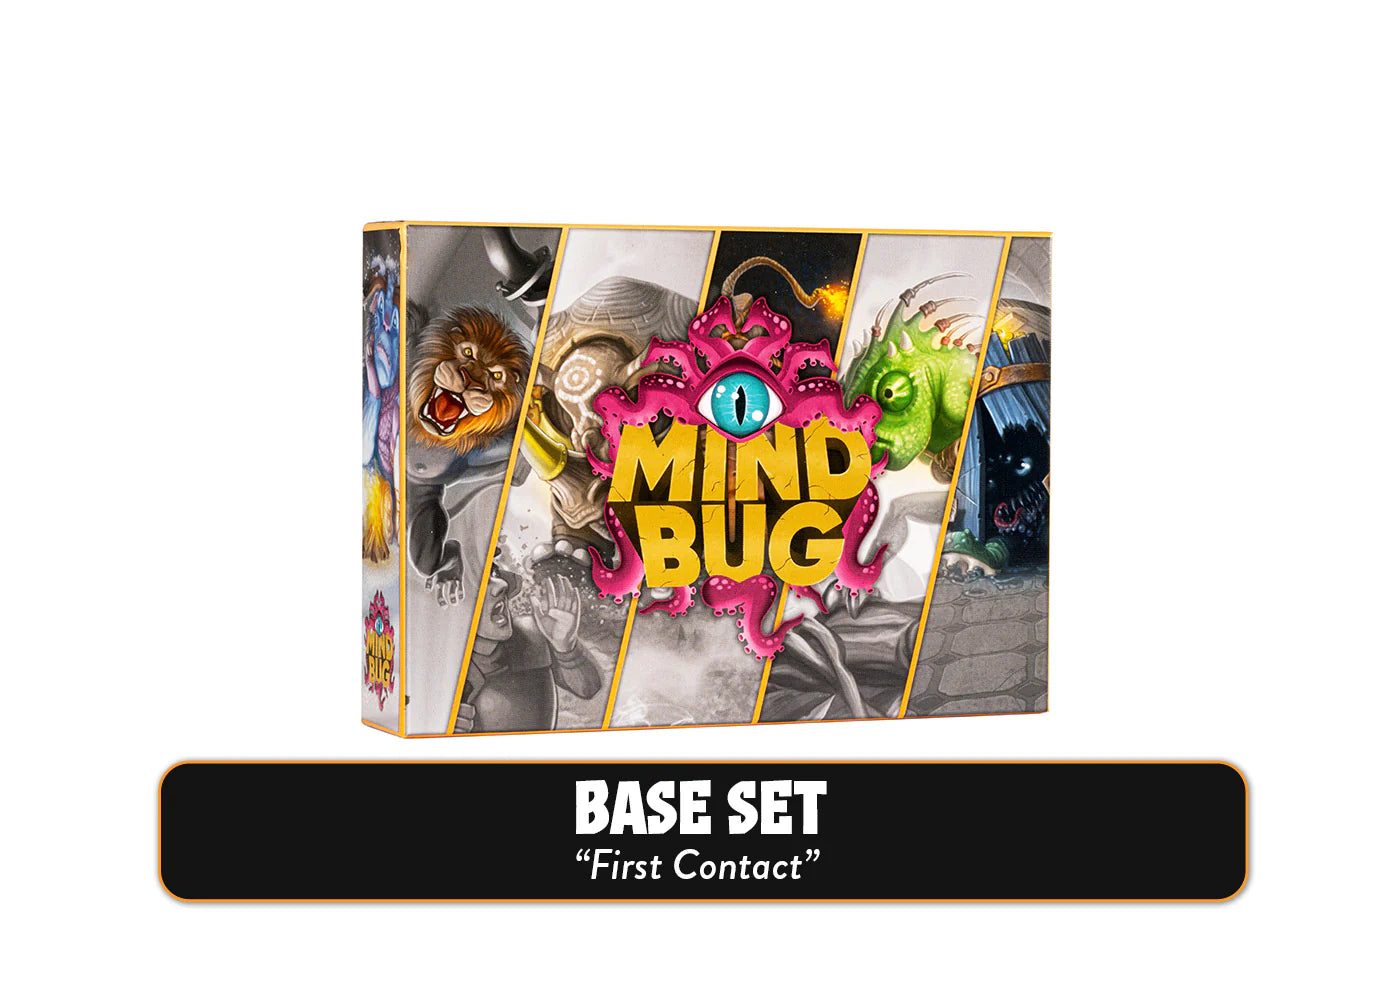 Mindbug - Base Set "First Contact" - Retail Edition